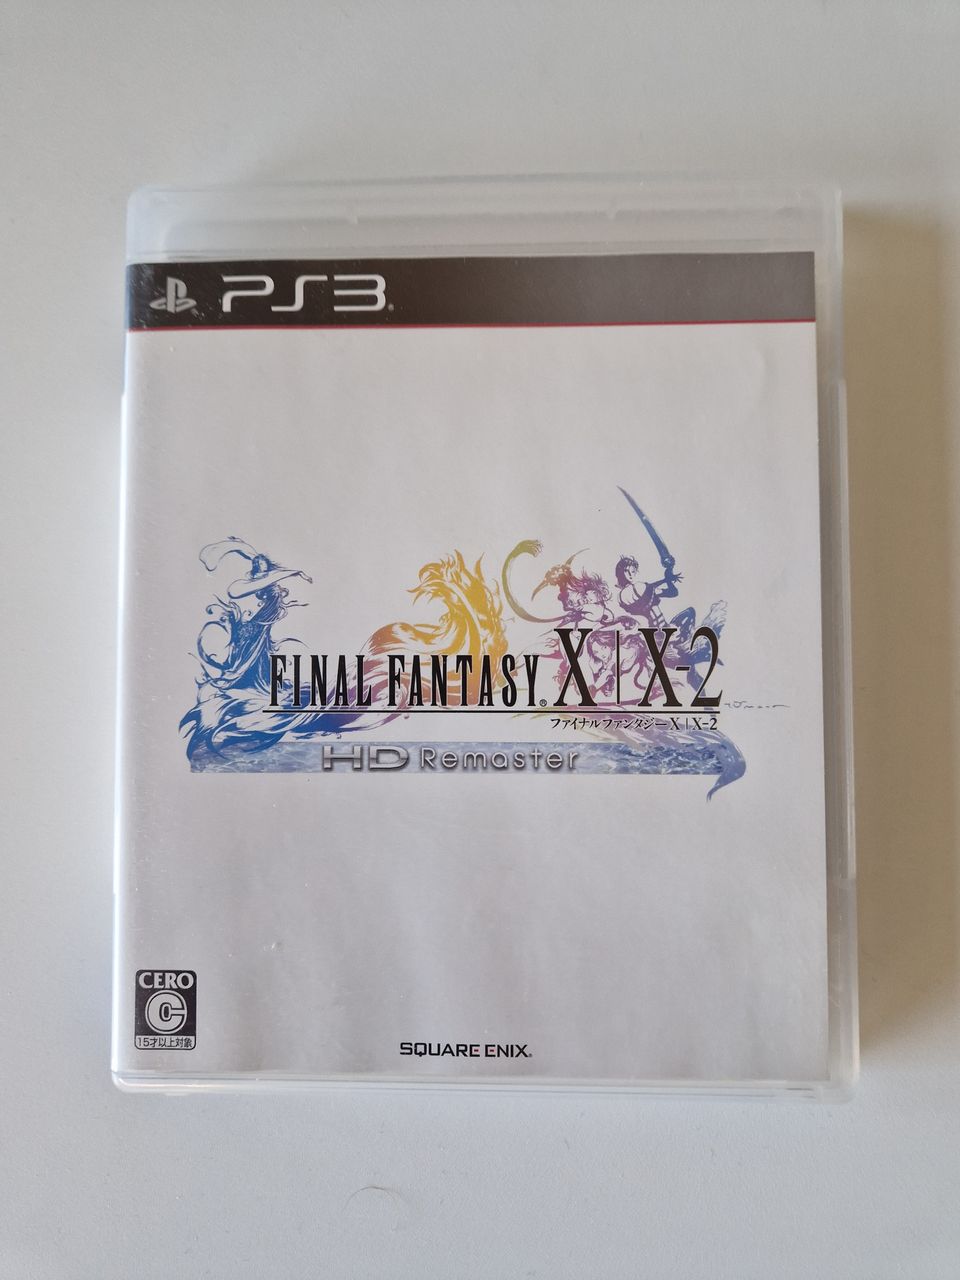 PS3: Final Fantasy X/X-2 HD Remaster (JPN)